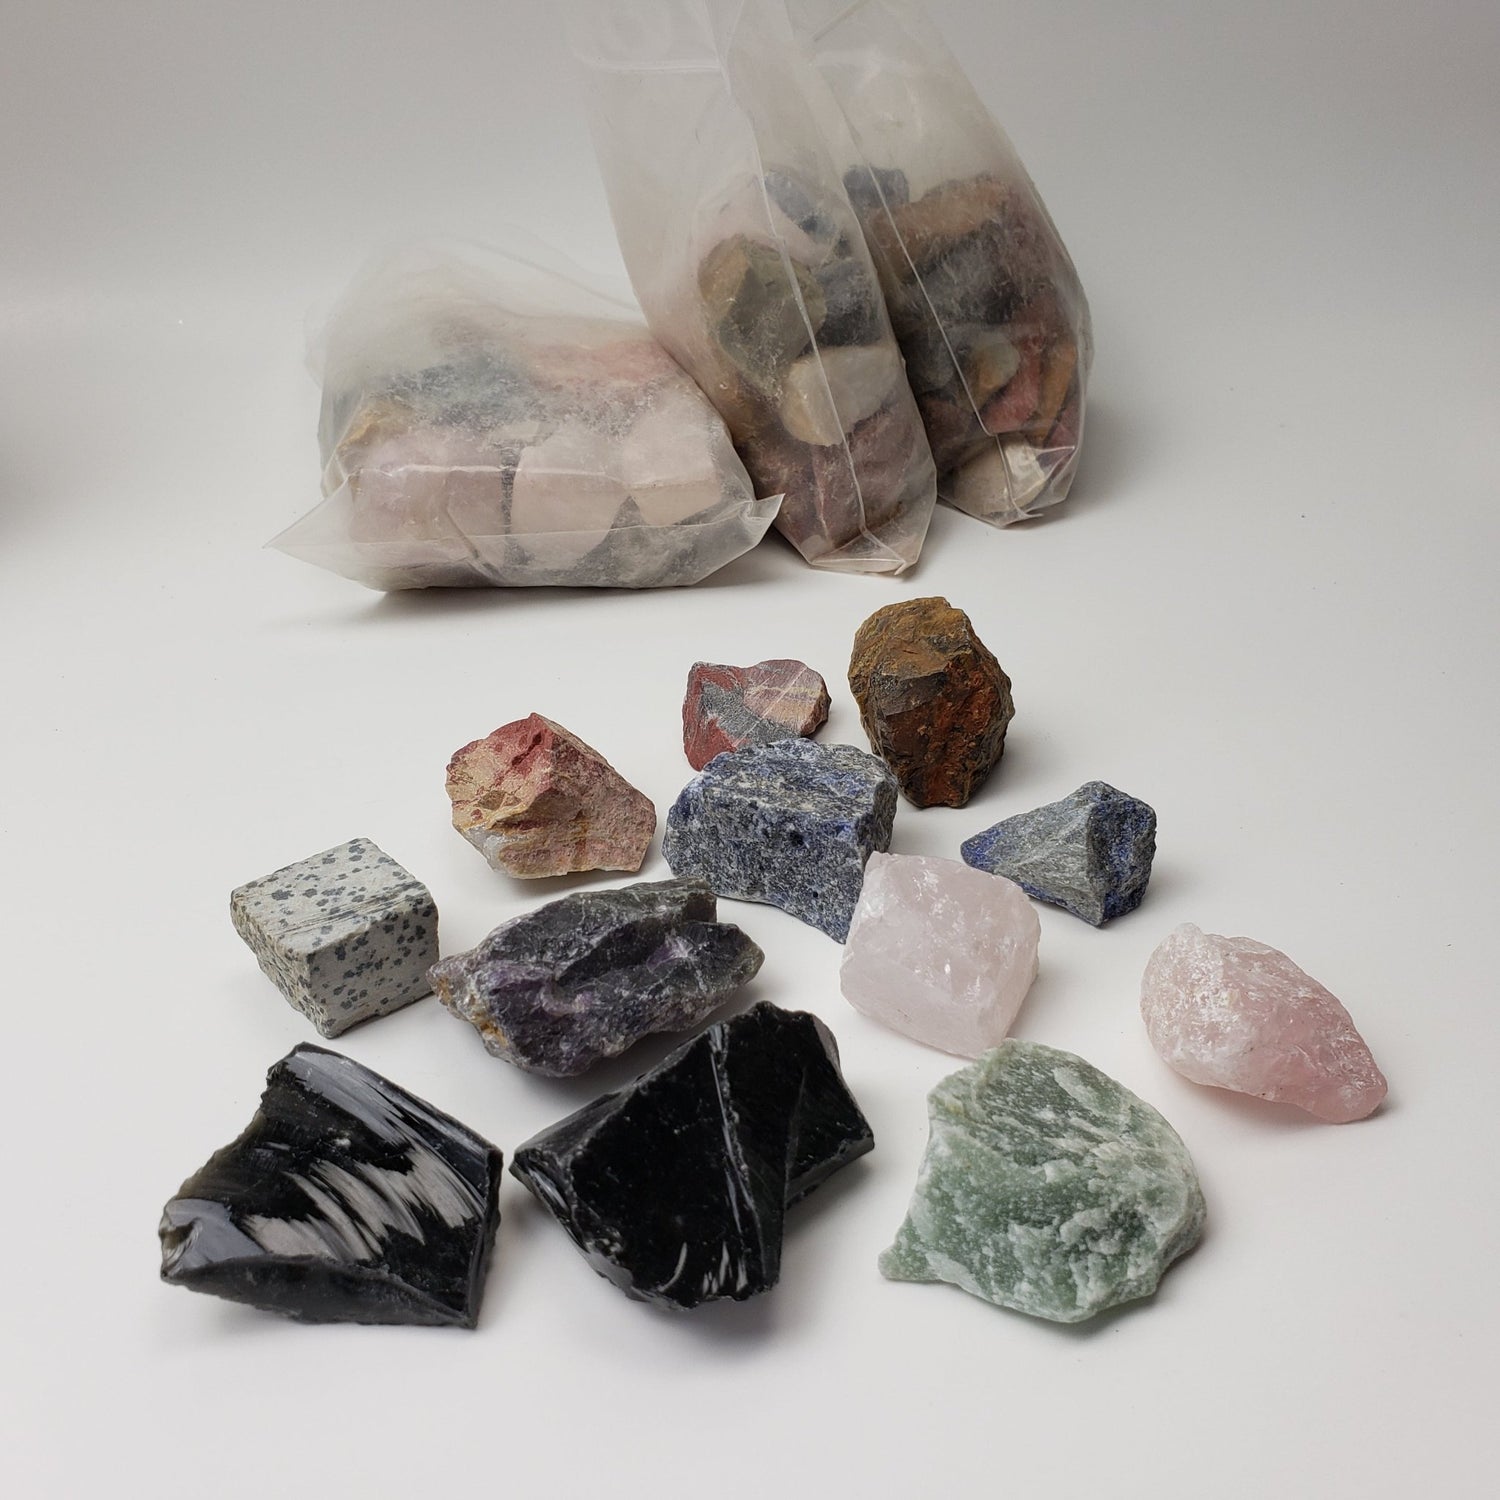 Rock Tumbler Madagascar Mixed Rocks Refill Kit |Gemstones and Rocks for Tumbling | 4 Pounds